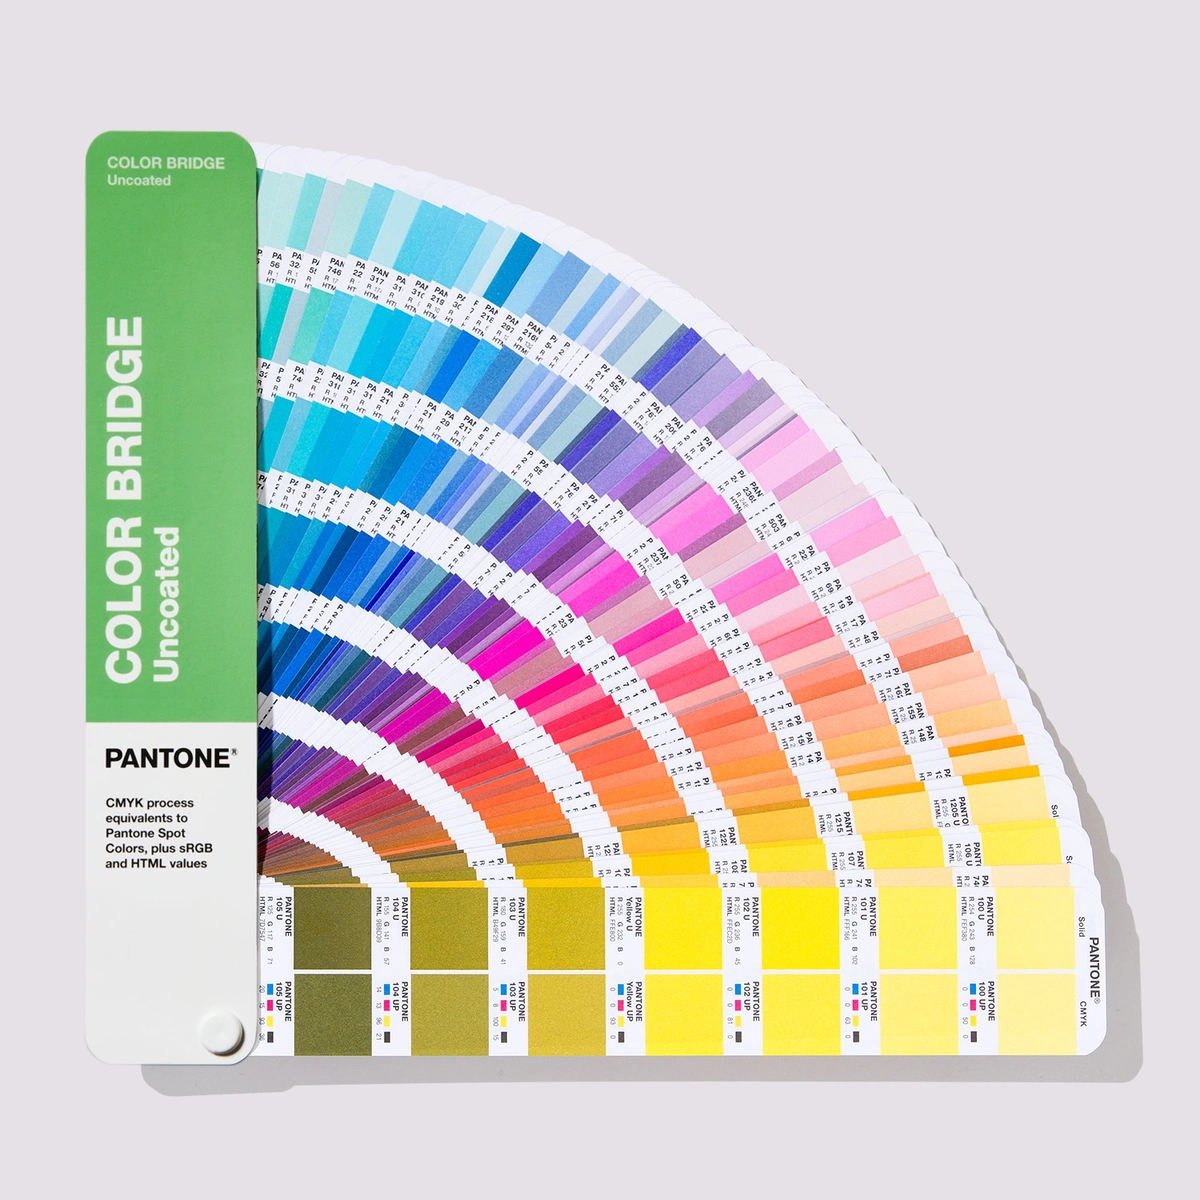 Controlul culorii / Pantone - PANTONE Color Bridge Guide Uncoated, transilvae.ro